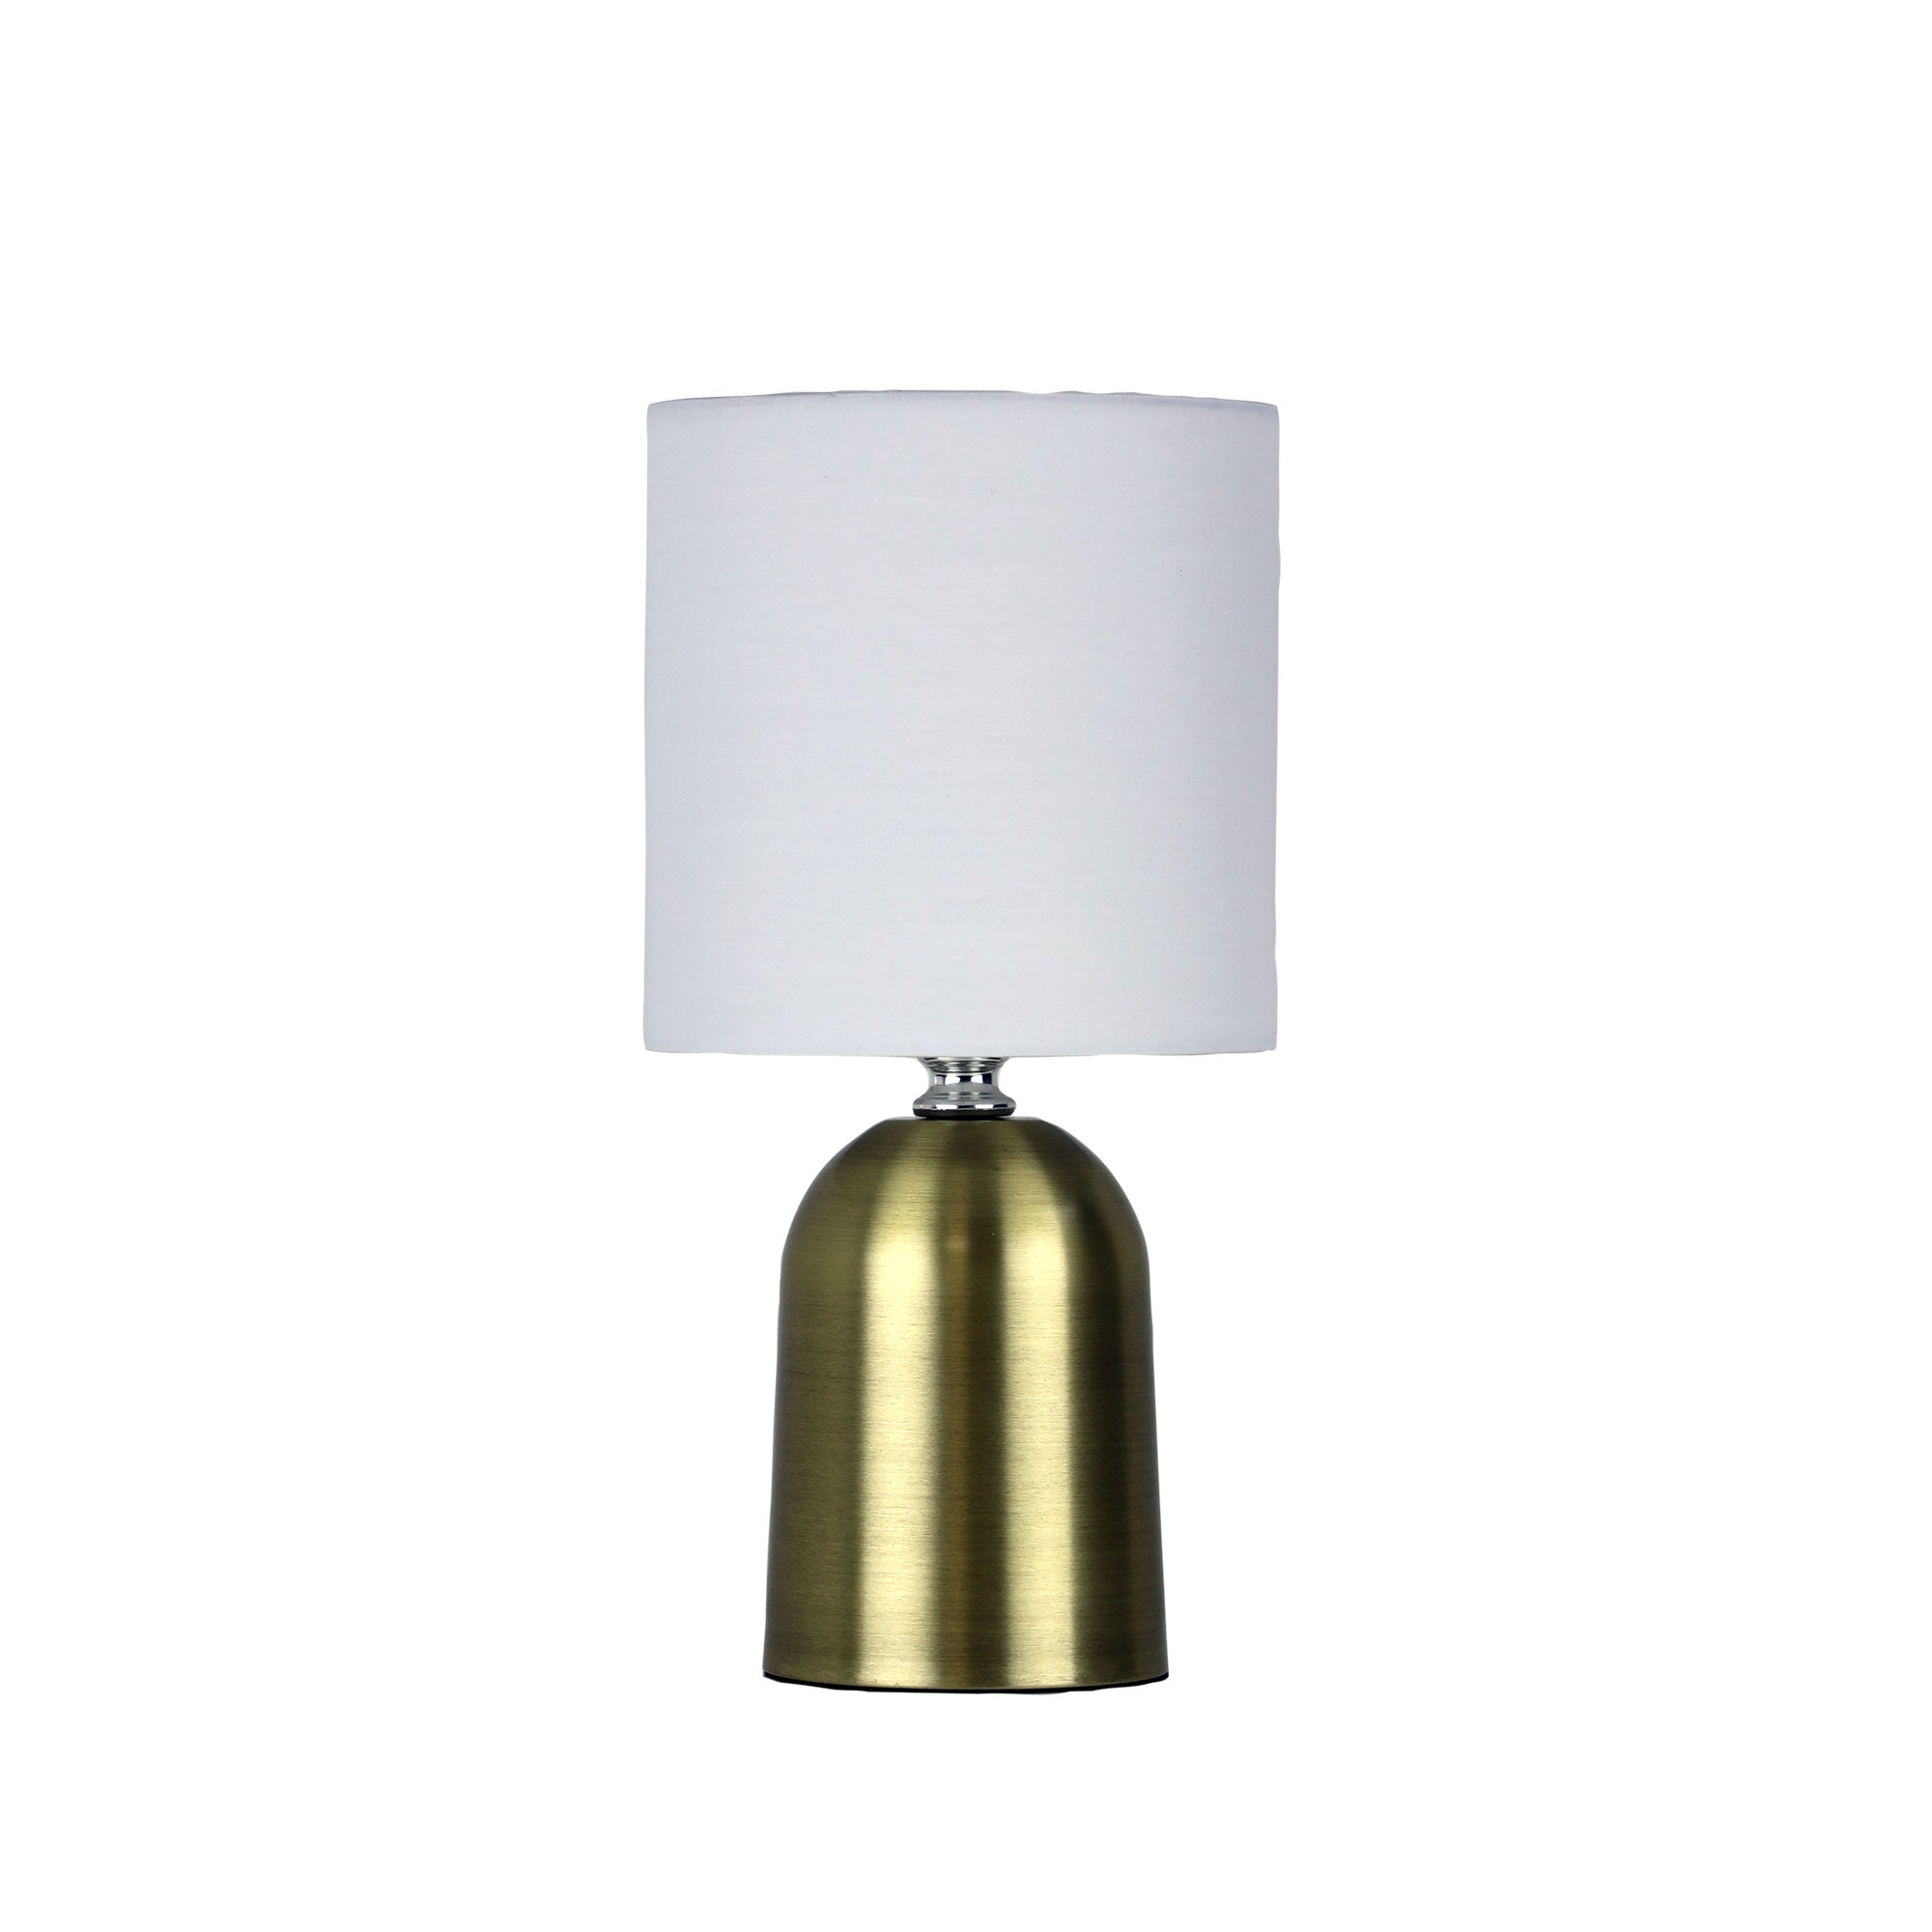 Espen Touch Table Lamp Antique Brass - LF9207AB